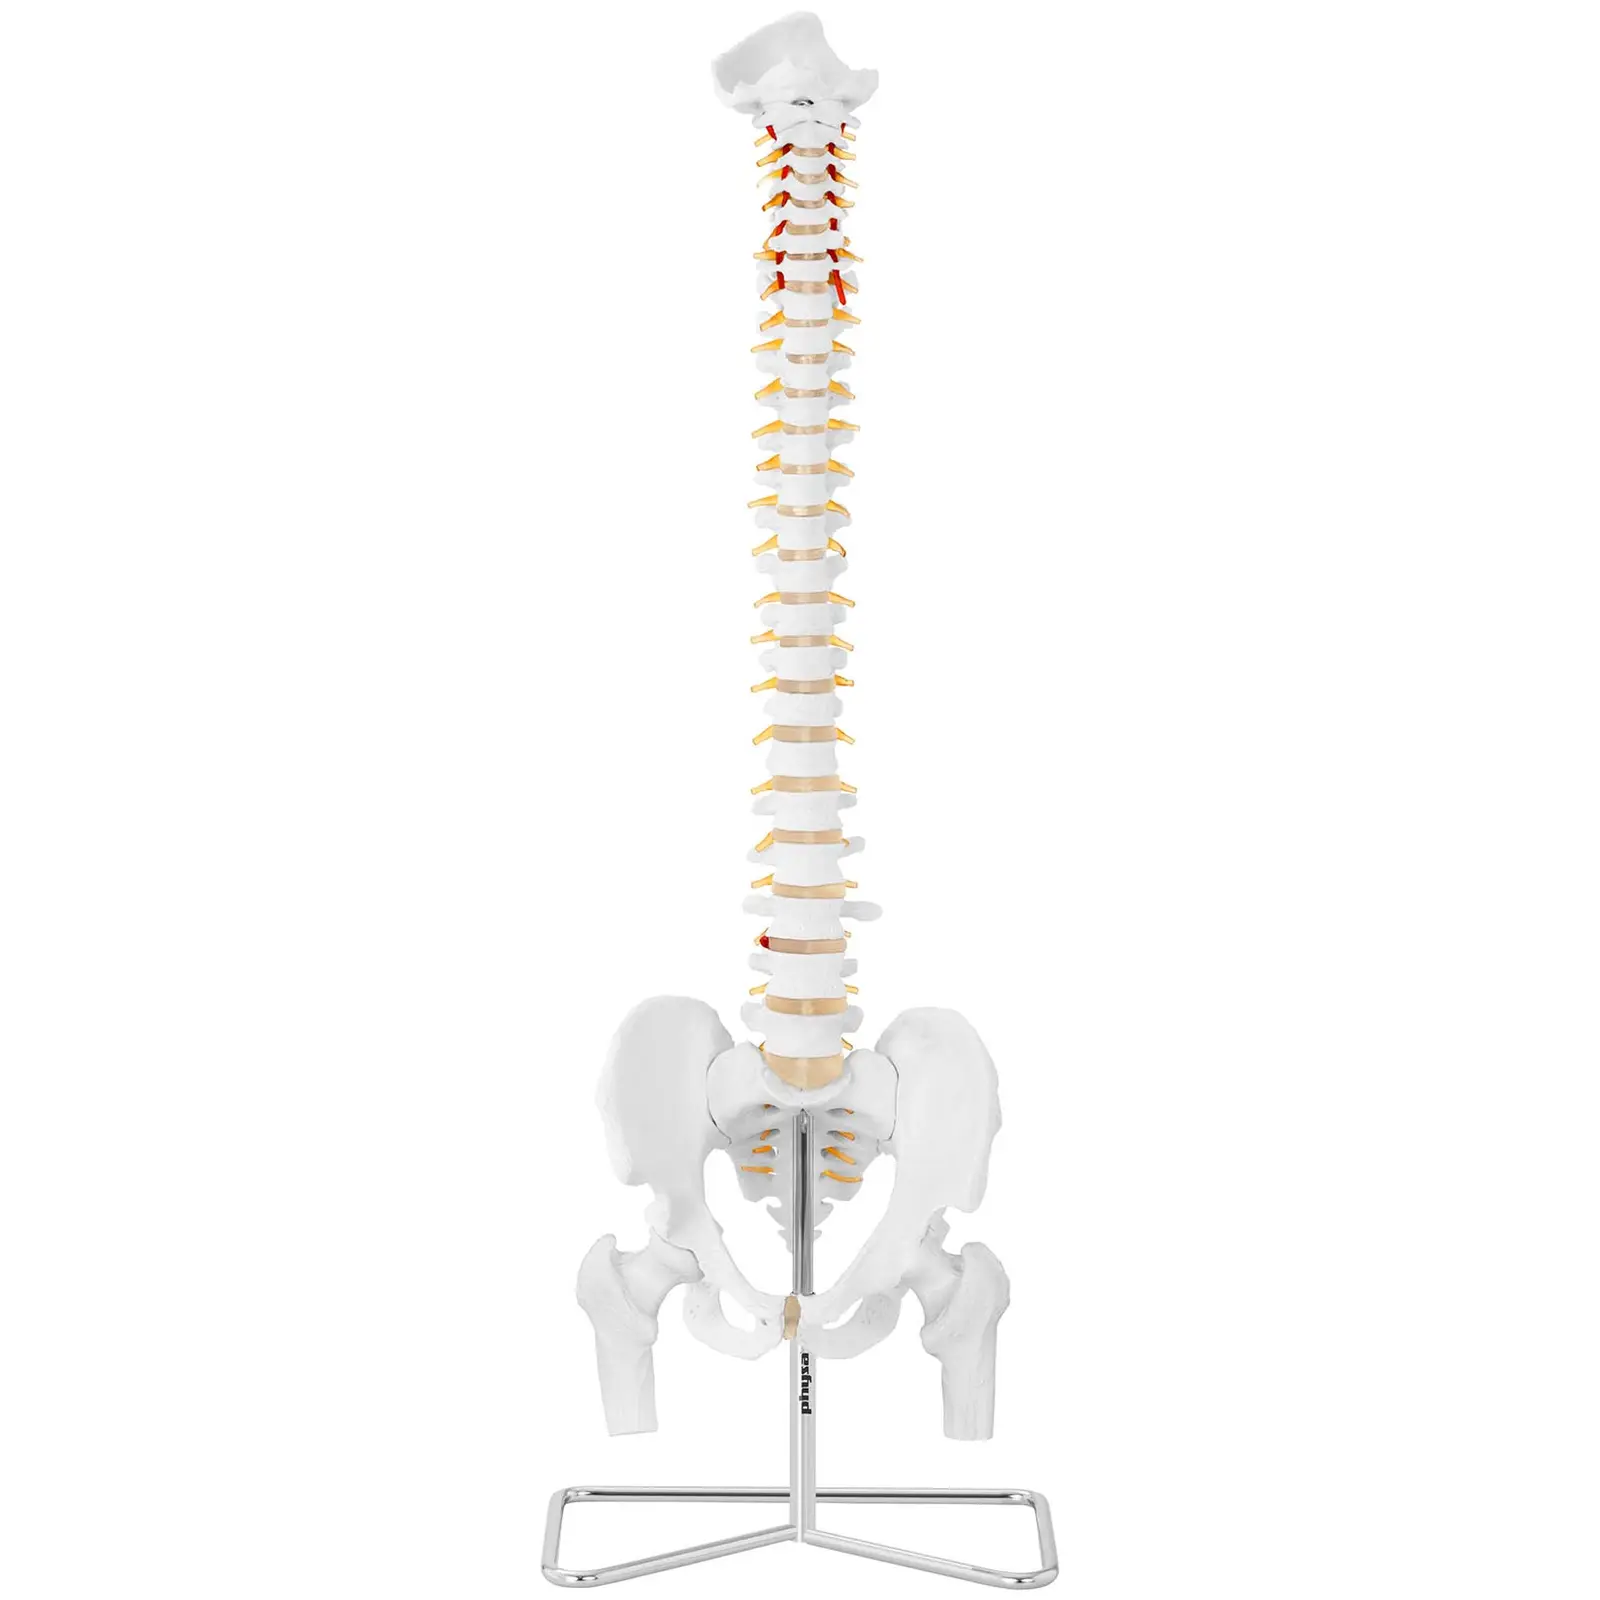 Coluna vertebral com pélvis masculina - 86 cm - modelo anatómico